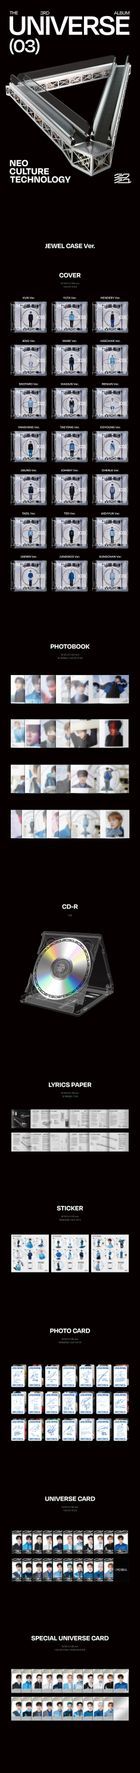 NCT Vol. 3 - Universe (Jewel Case Version) (Johnny Version)